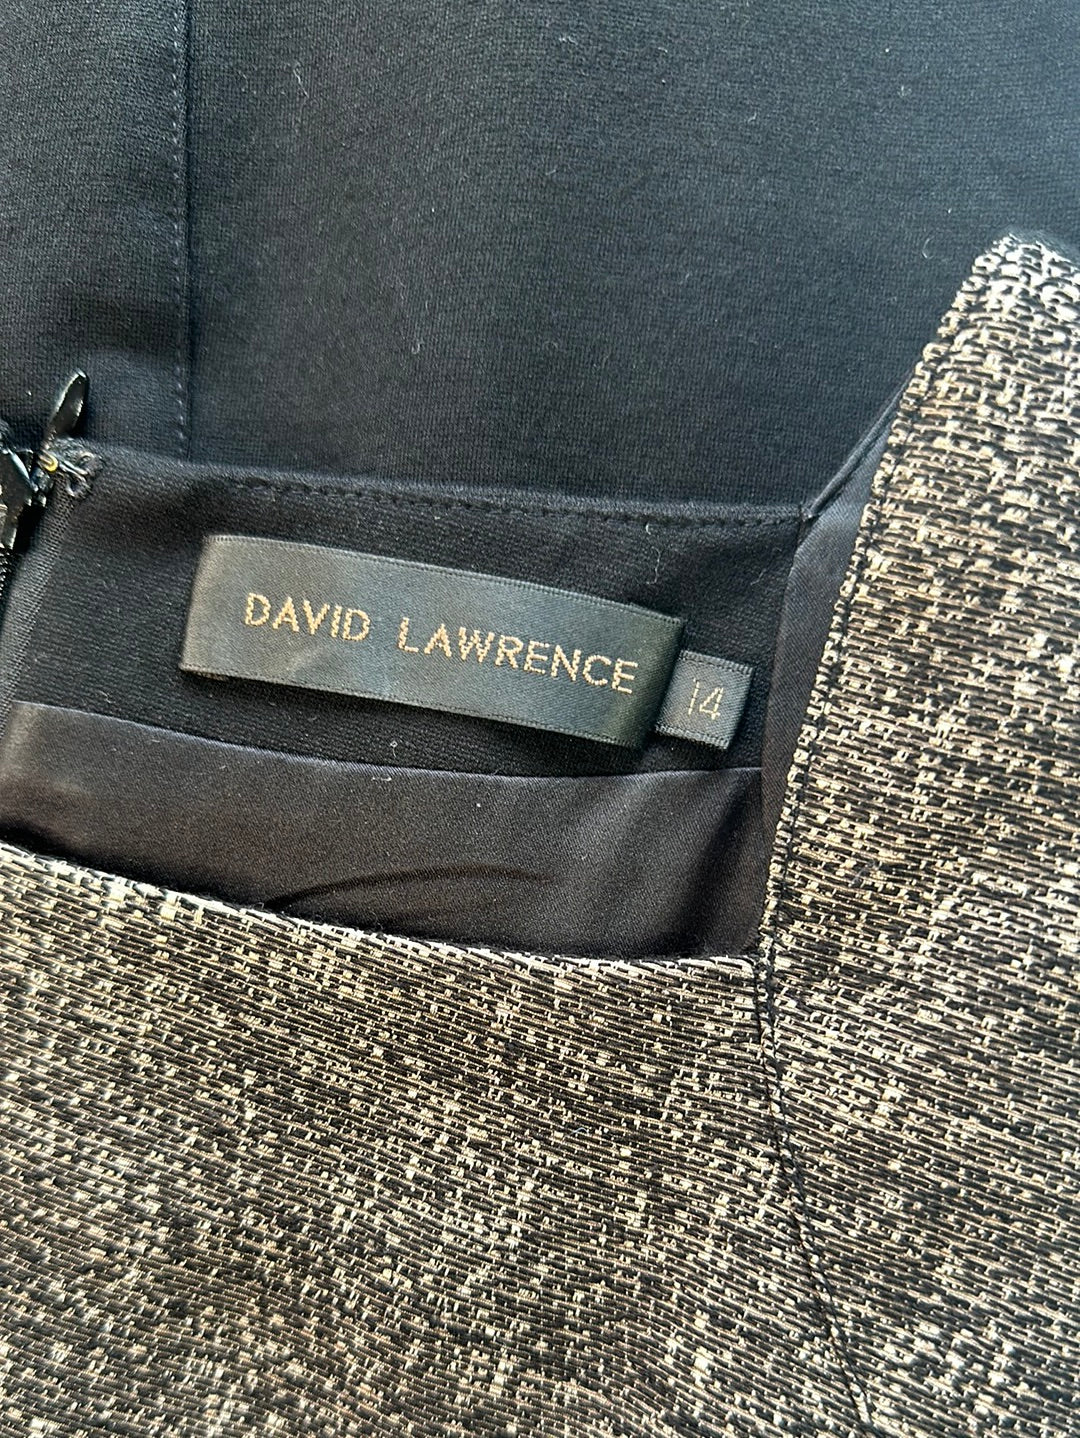 David Lawrence | dress | size 14 | midi length